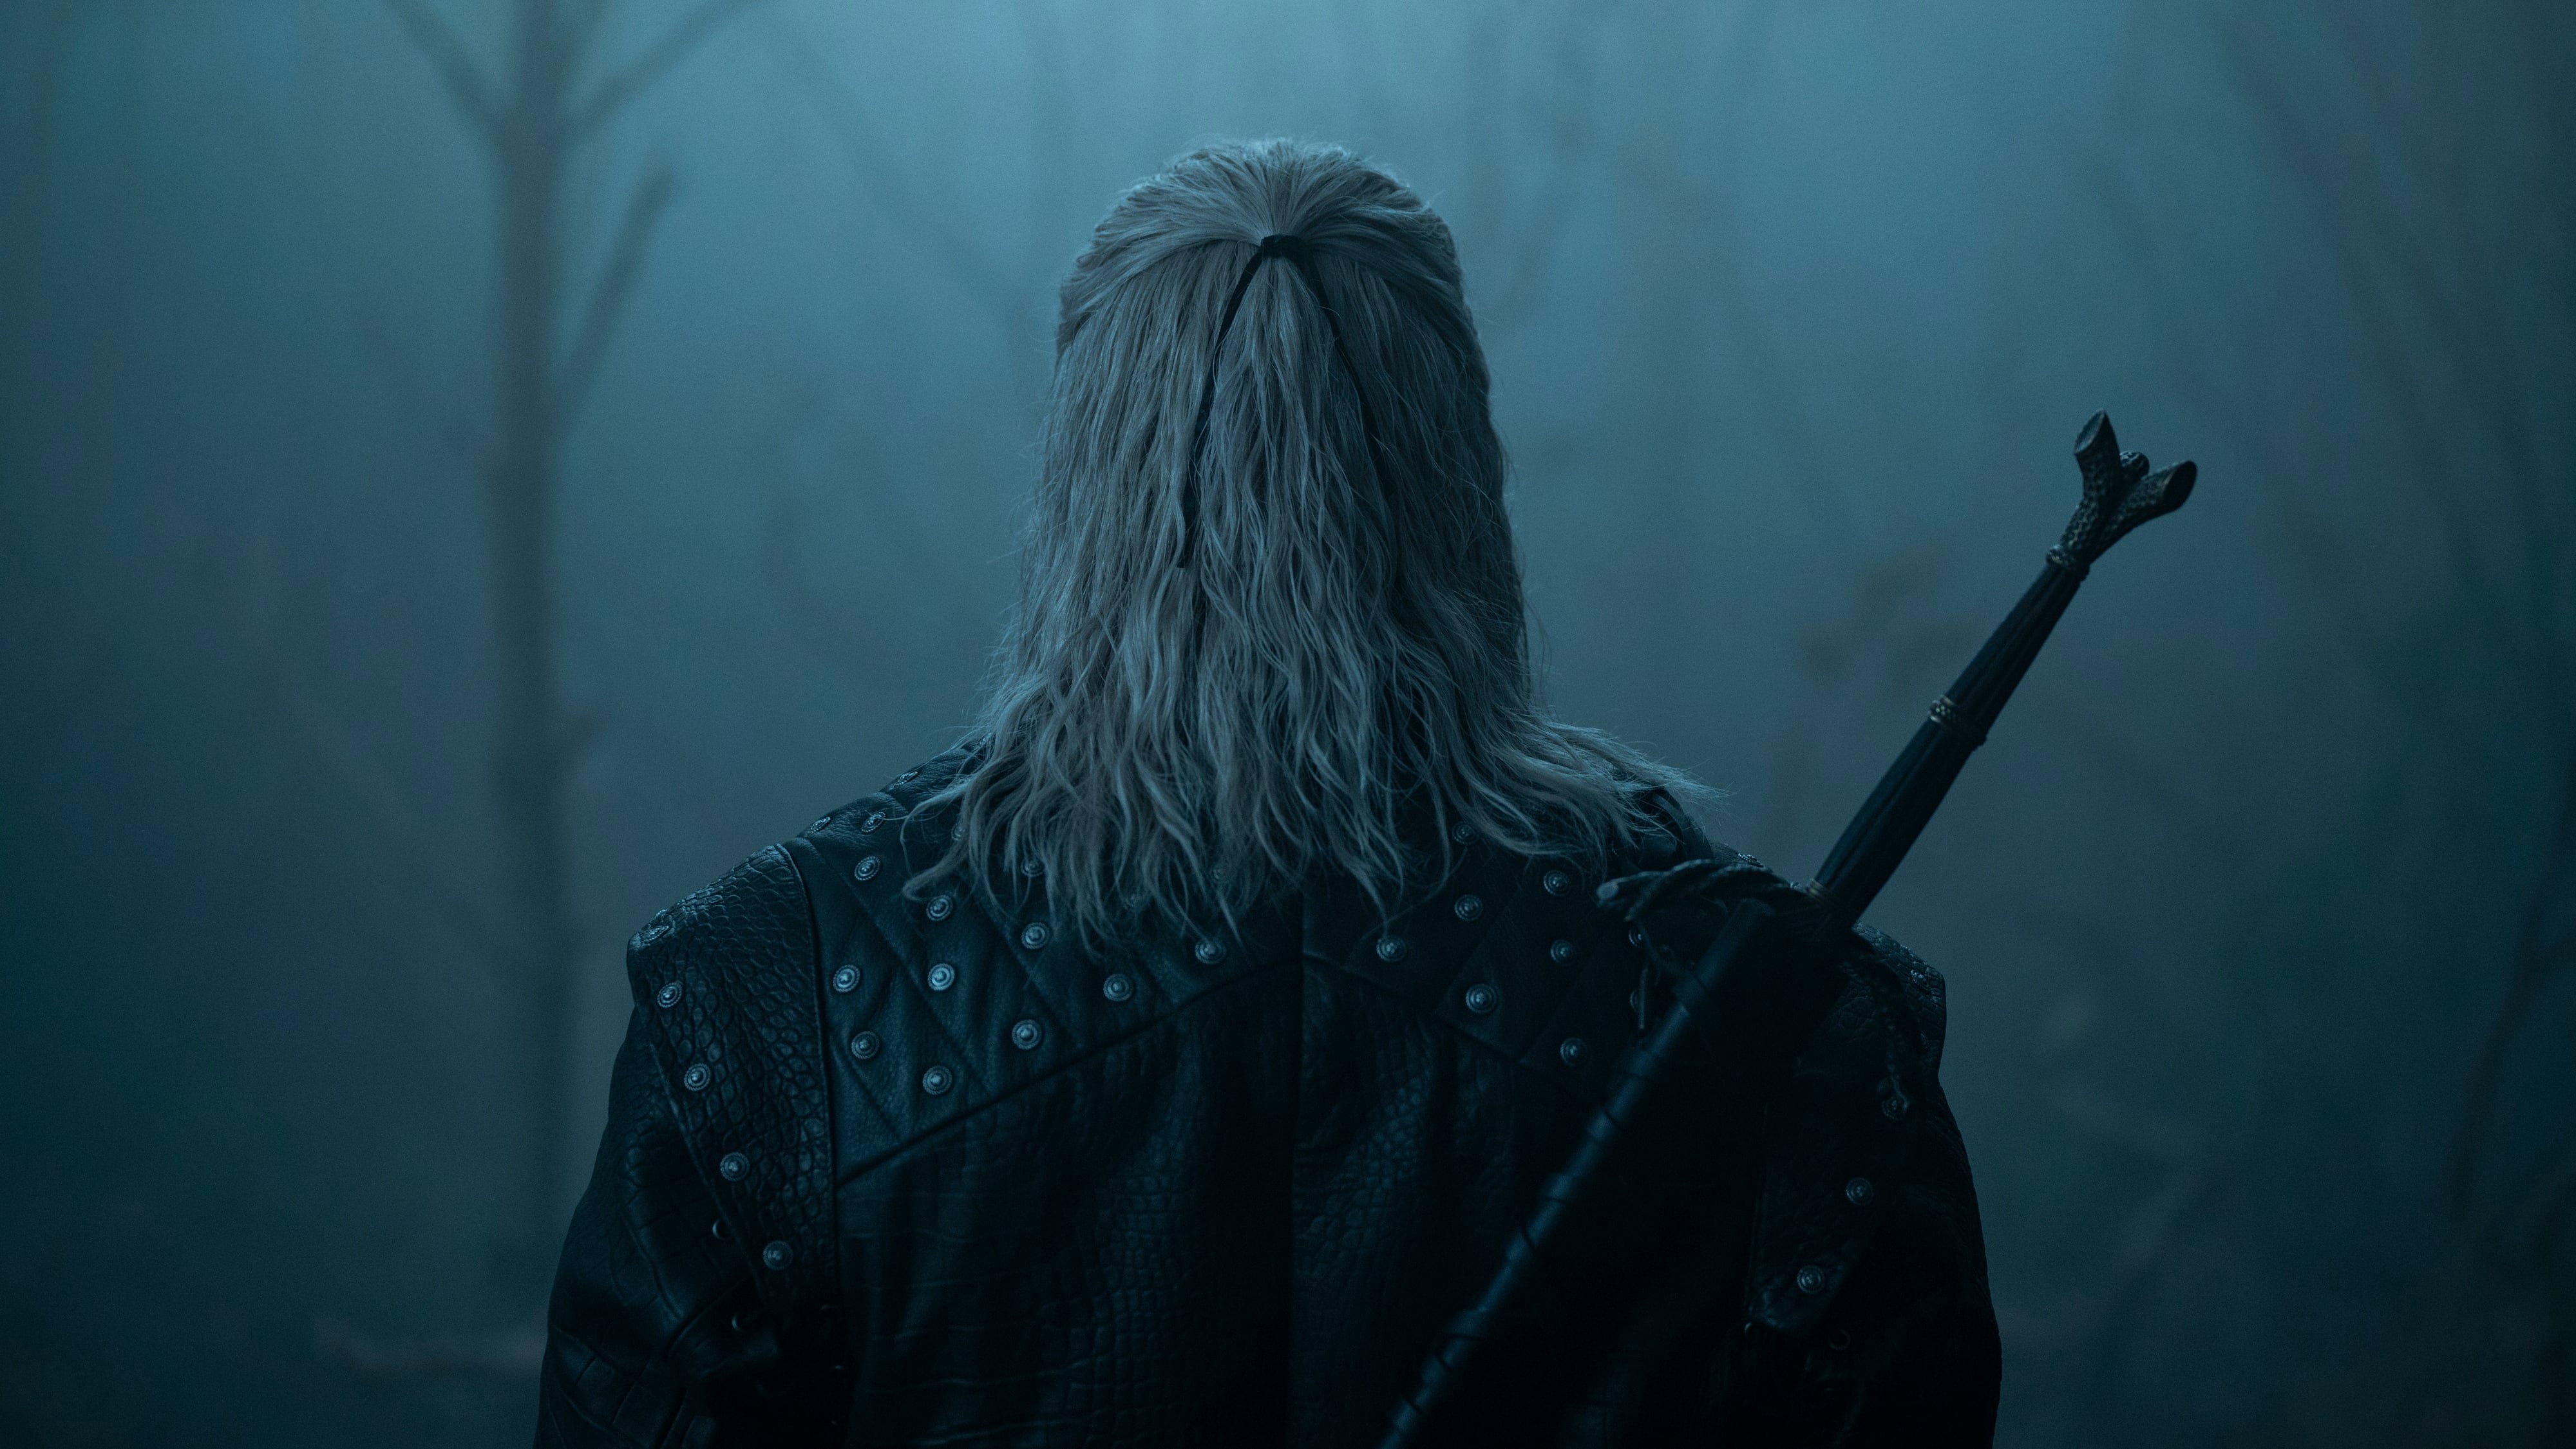 Liam Hemsworth stars as Geralt